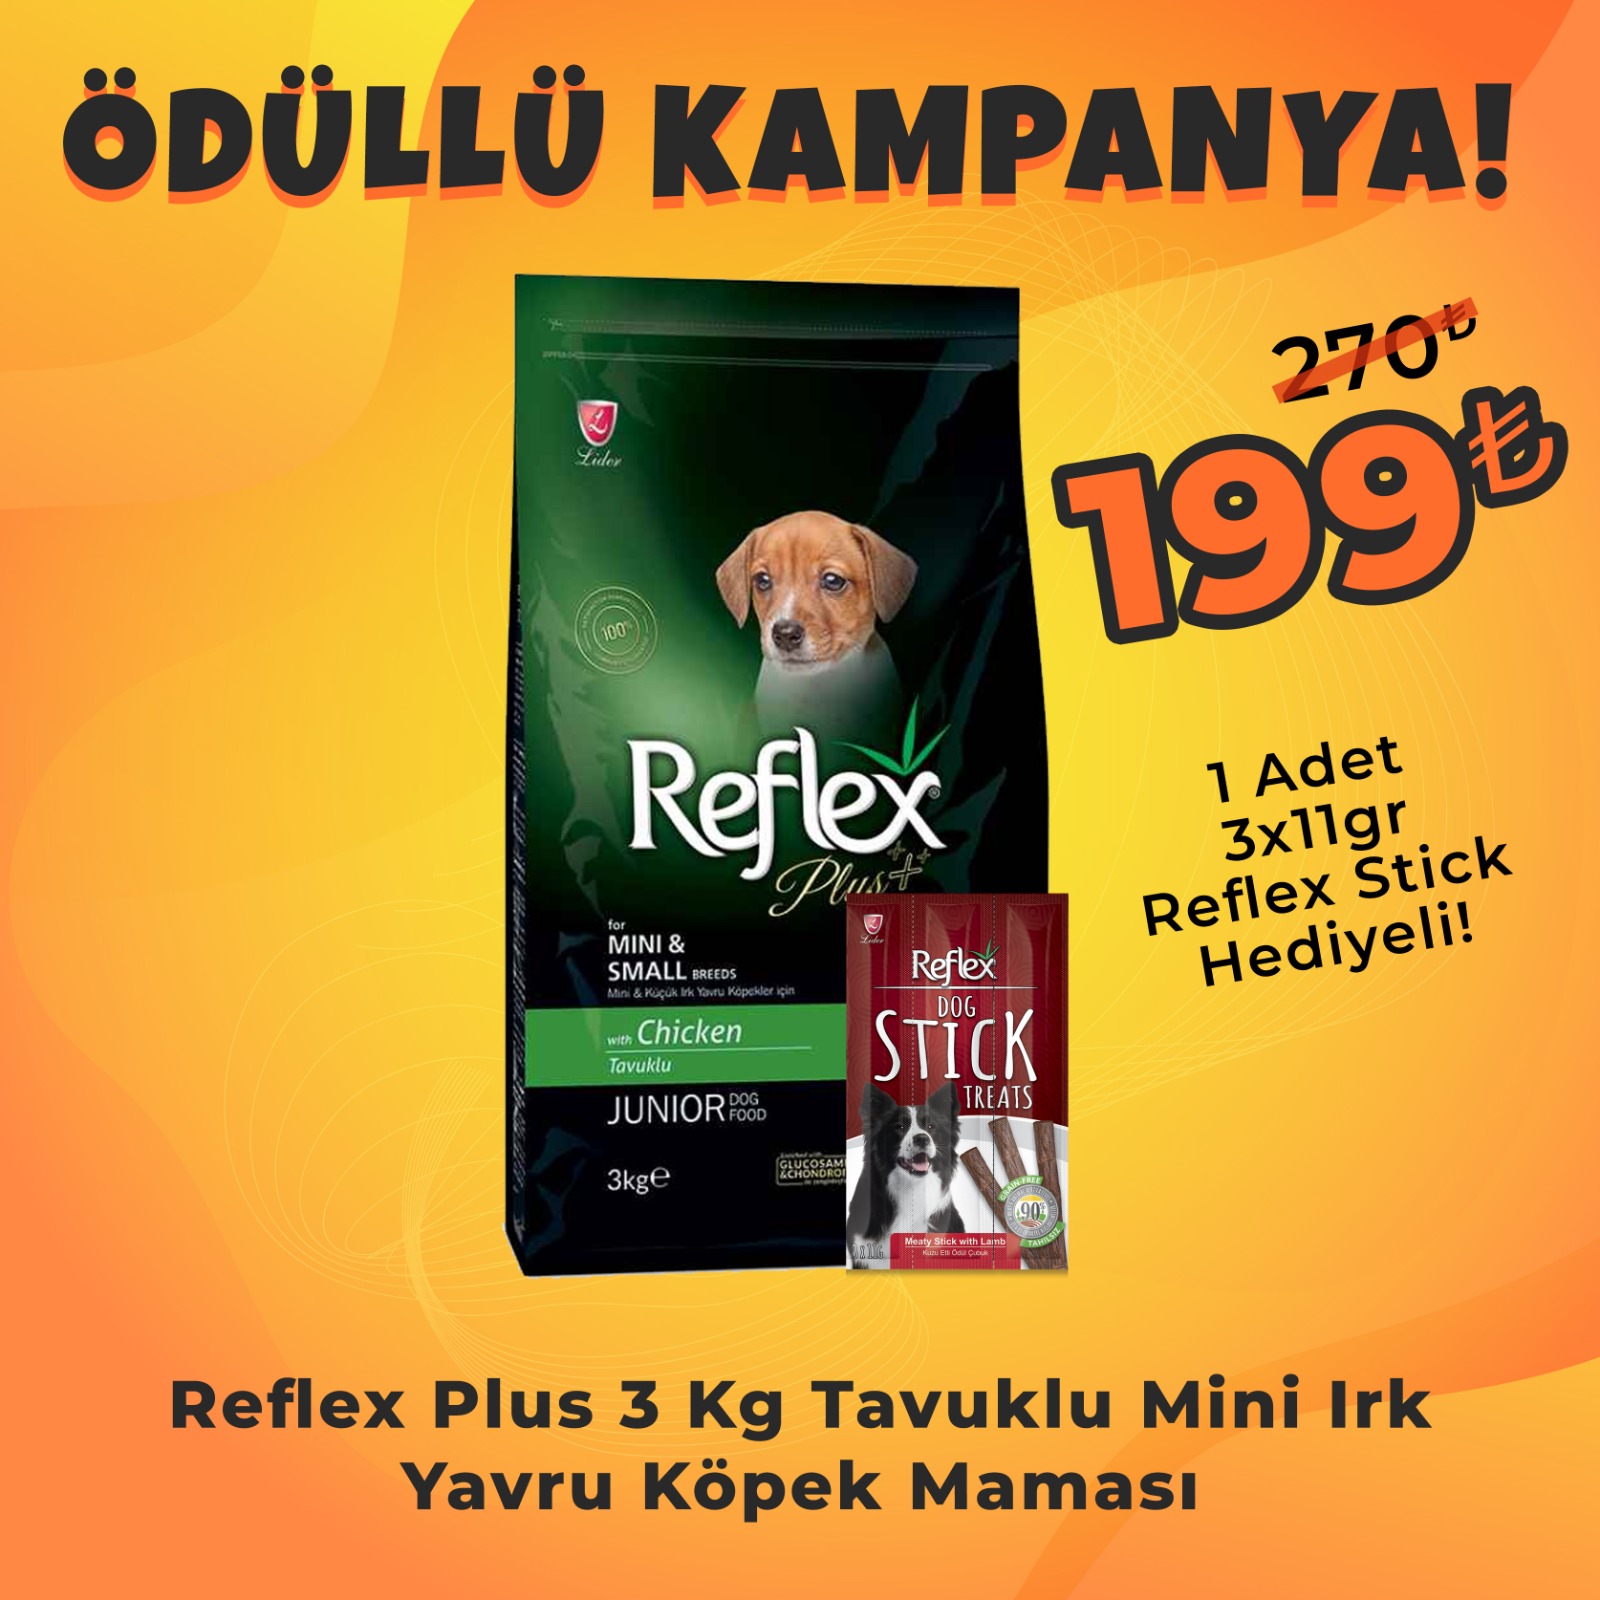 Reflex Plus Mini Irk Tavuklu Yavru Köpek Maması 3 Kg + Reflex Köpek Stick Ödül Hediyeli 3x11 Gr